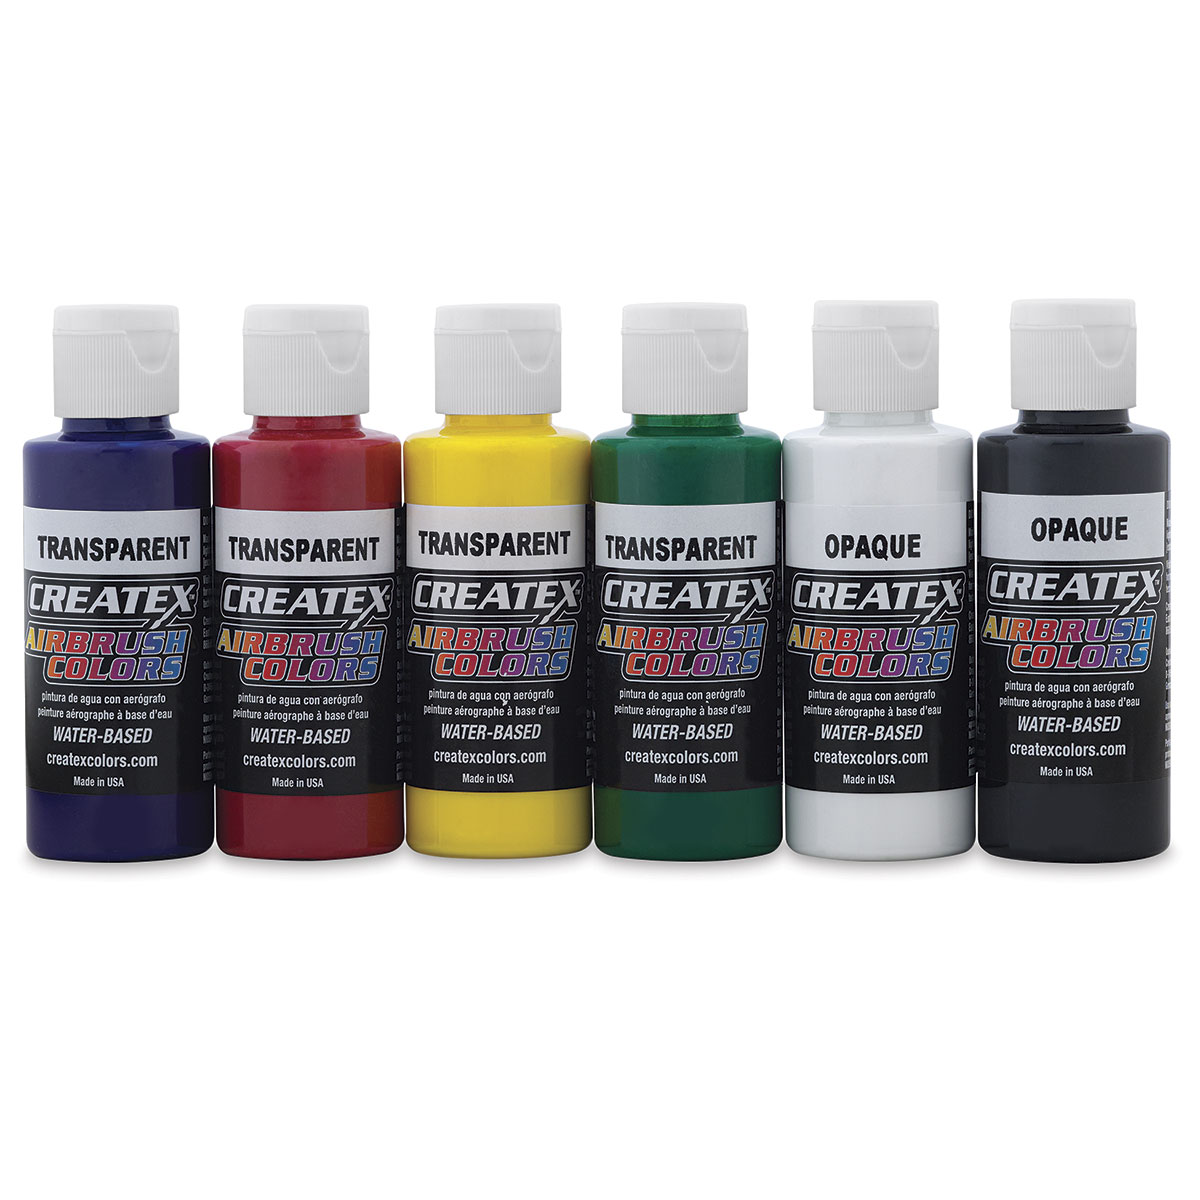 Createx Airbrush Paints and Sets, BLICK Art Materials